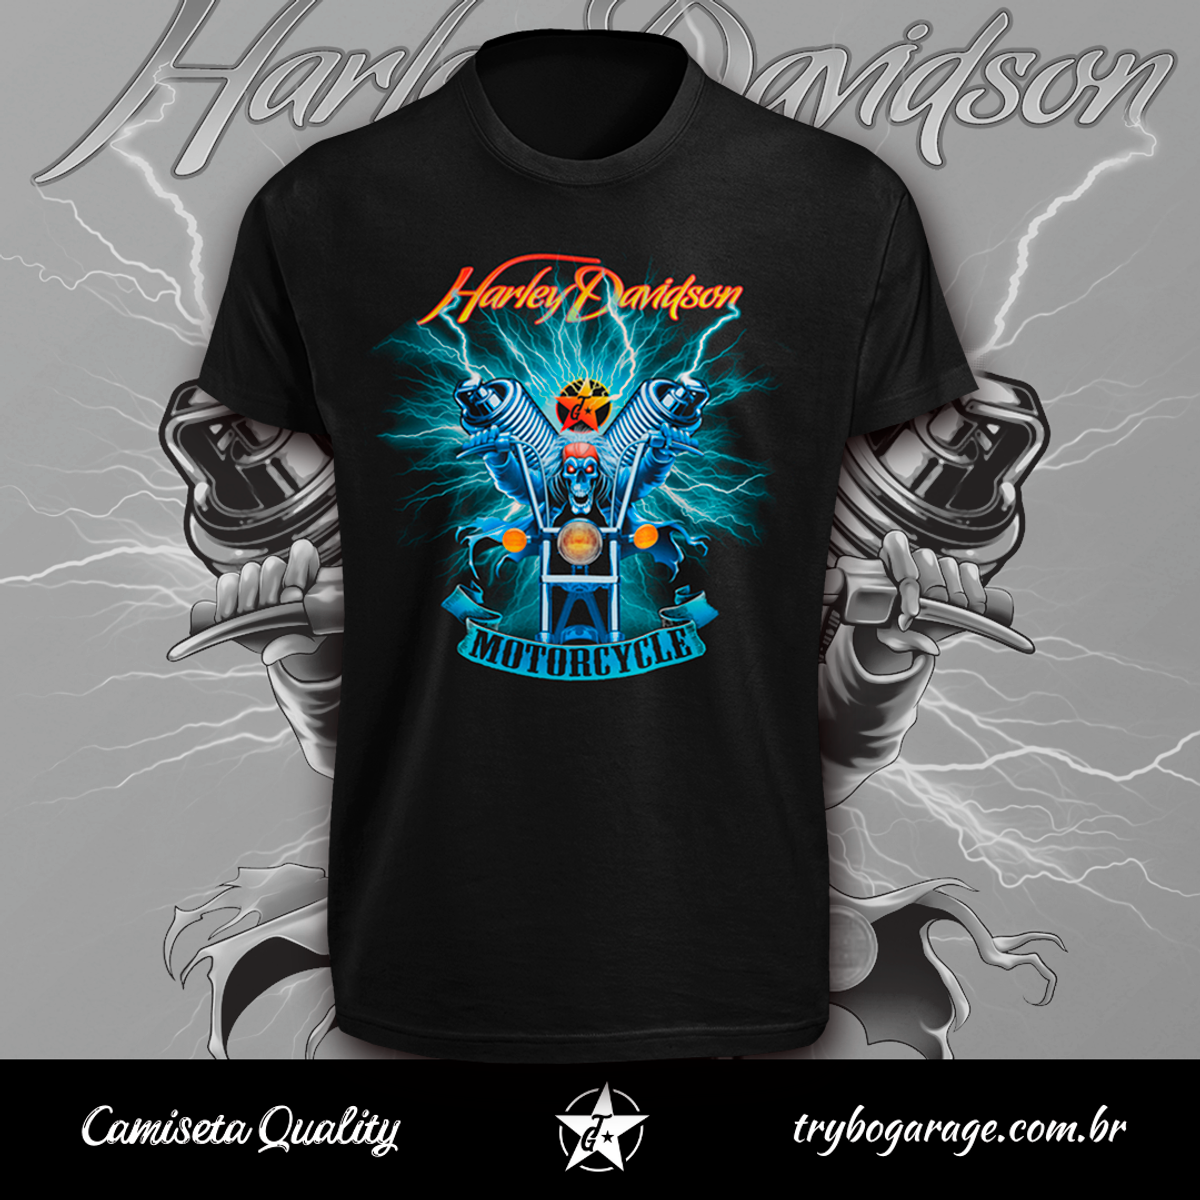 Nome do produto: Harley Davidson (Camiseta)